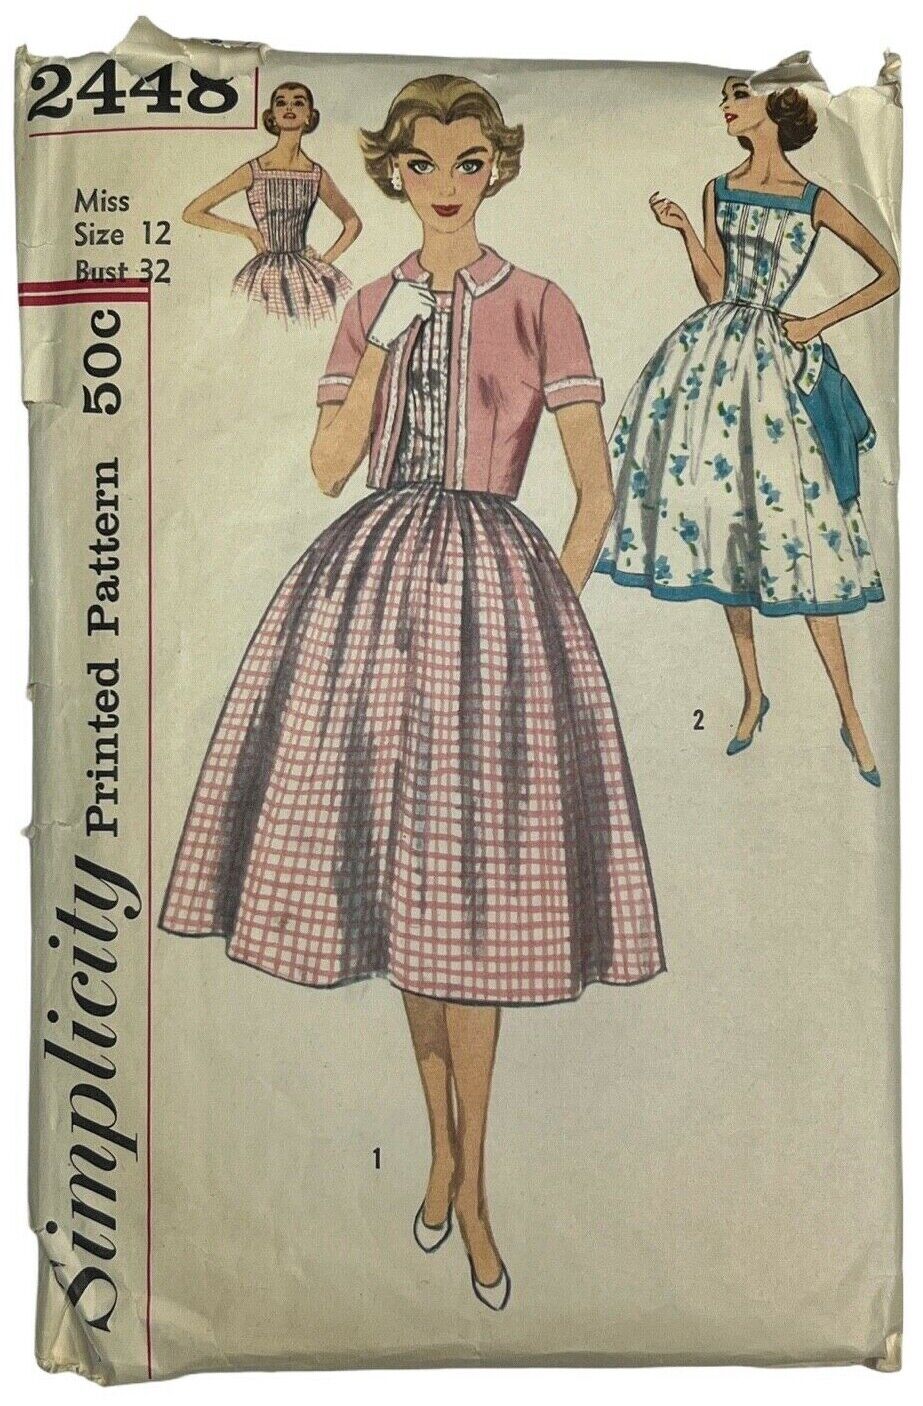 Vintage ca 1958 Simplicity Pattern 2448 Misses Sleeveless Dress Jacket Size 12